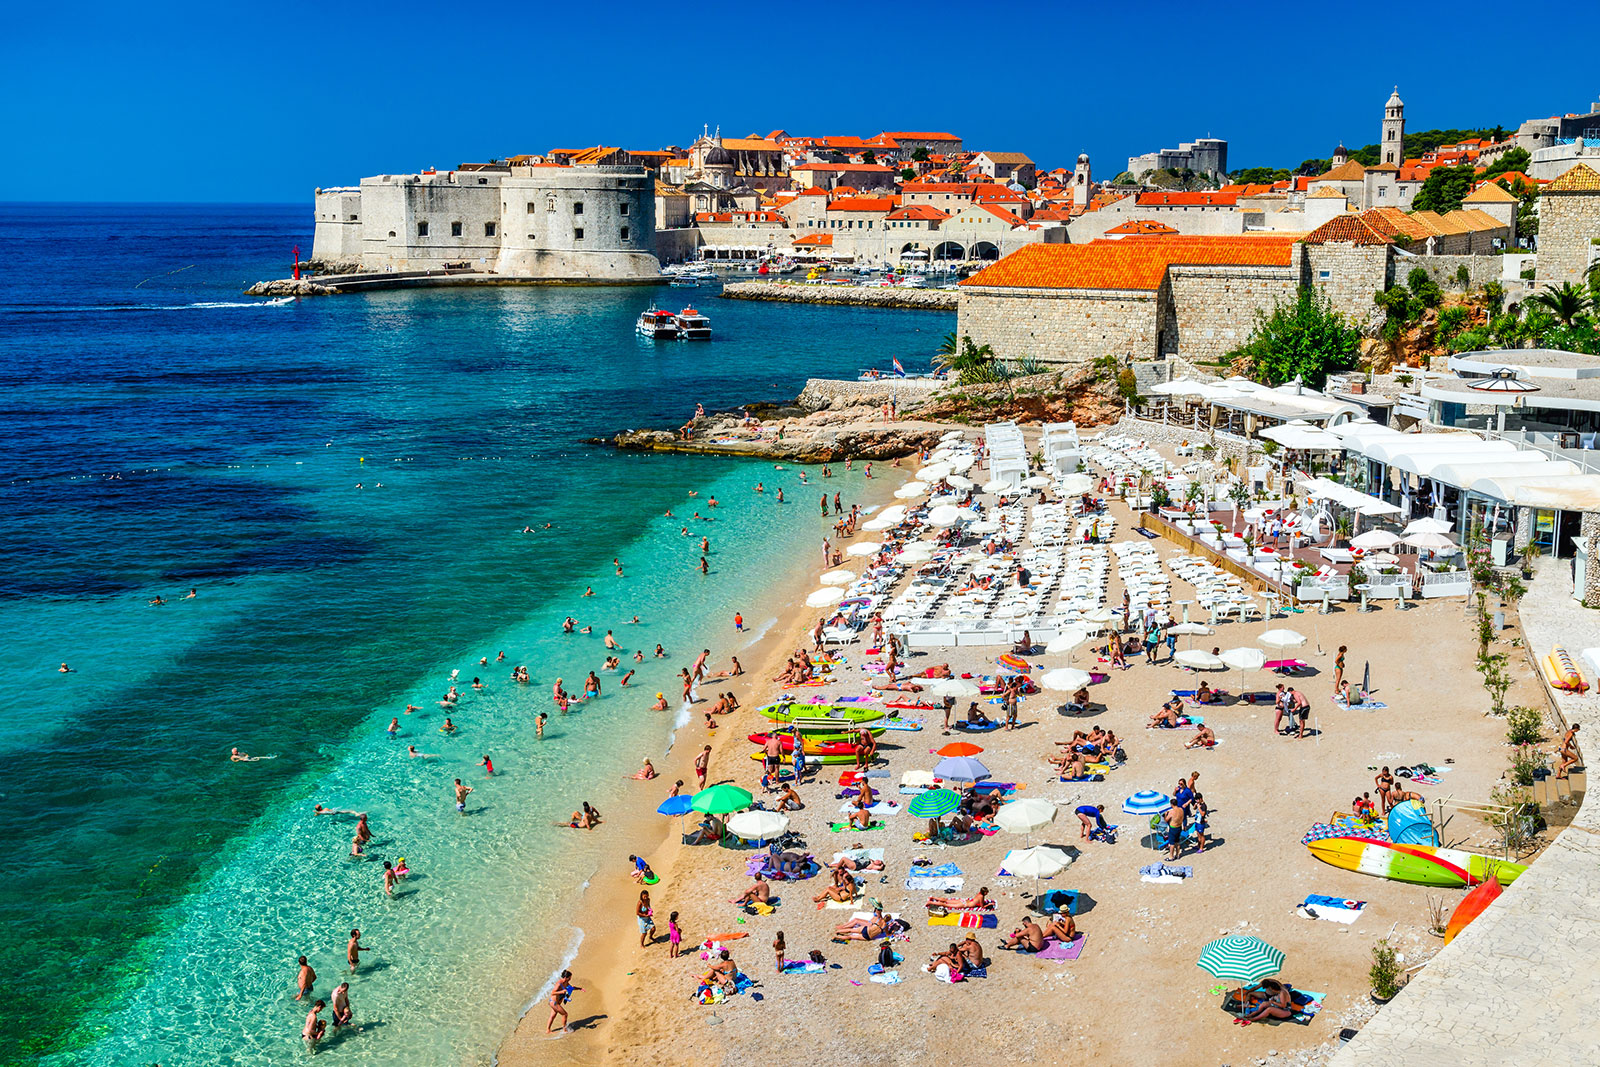 The Beach in Dubrovnik